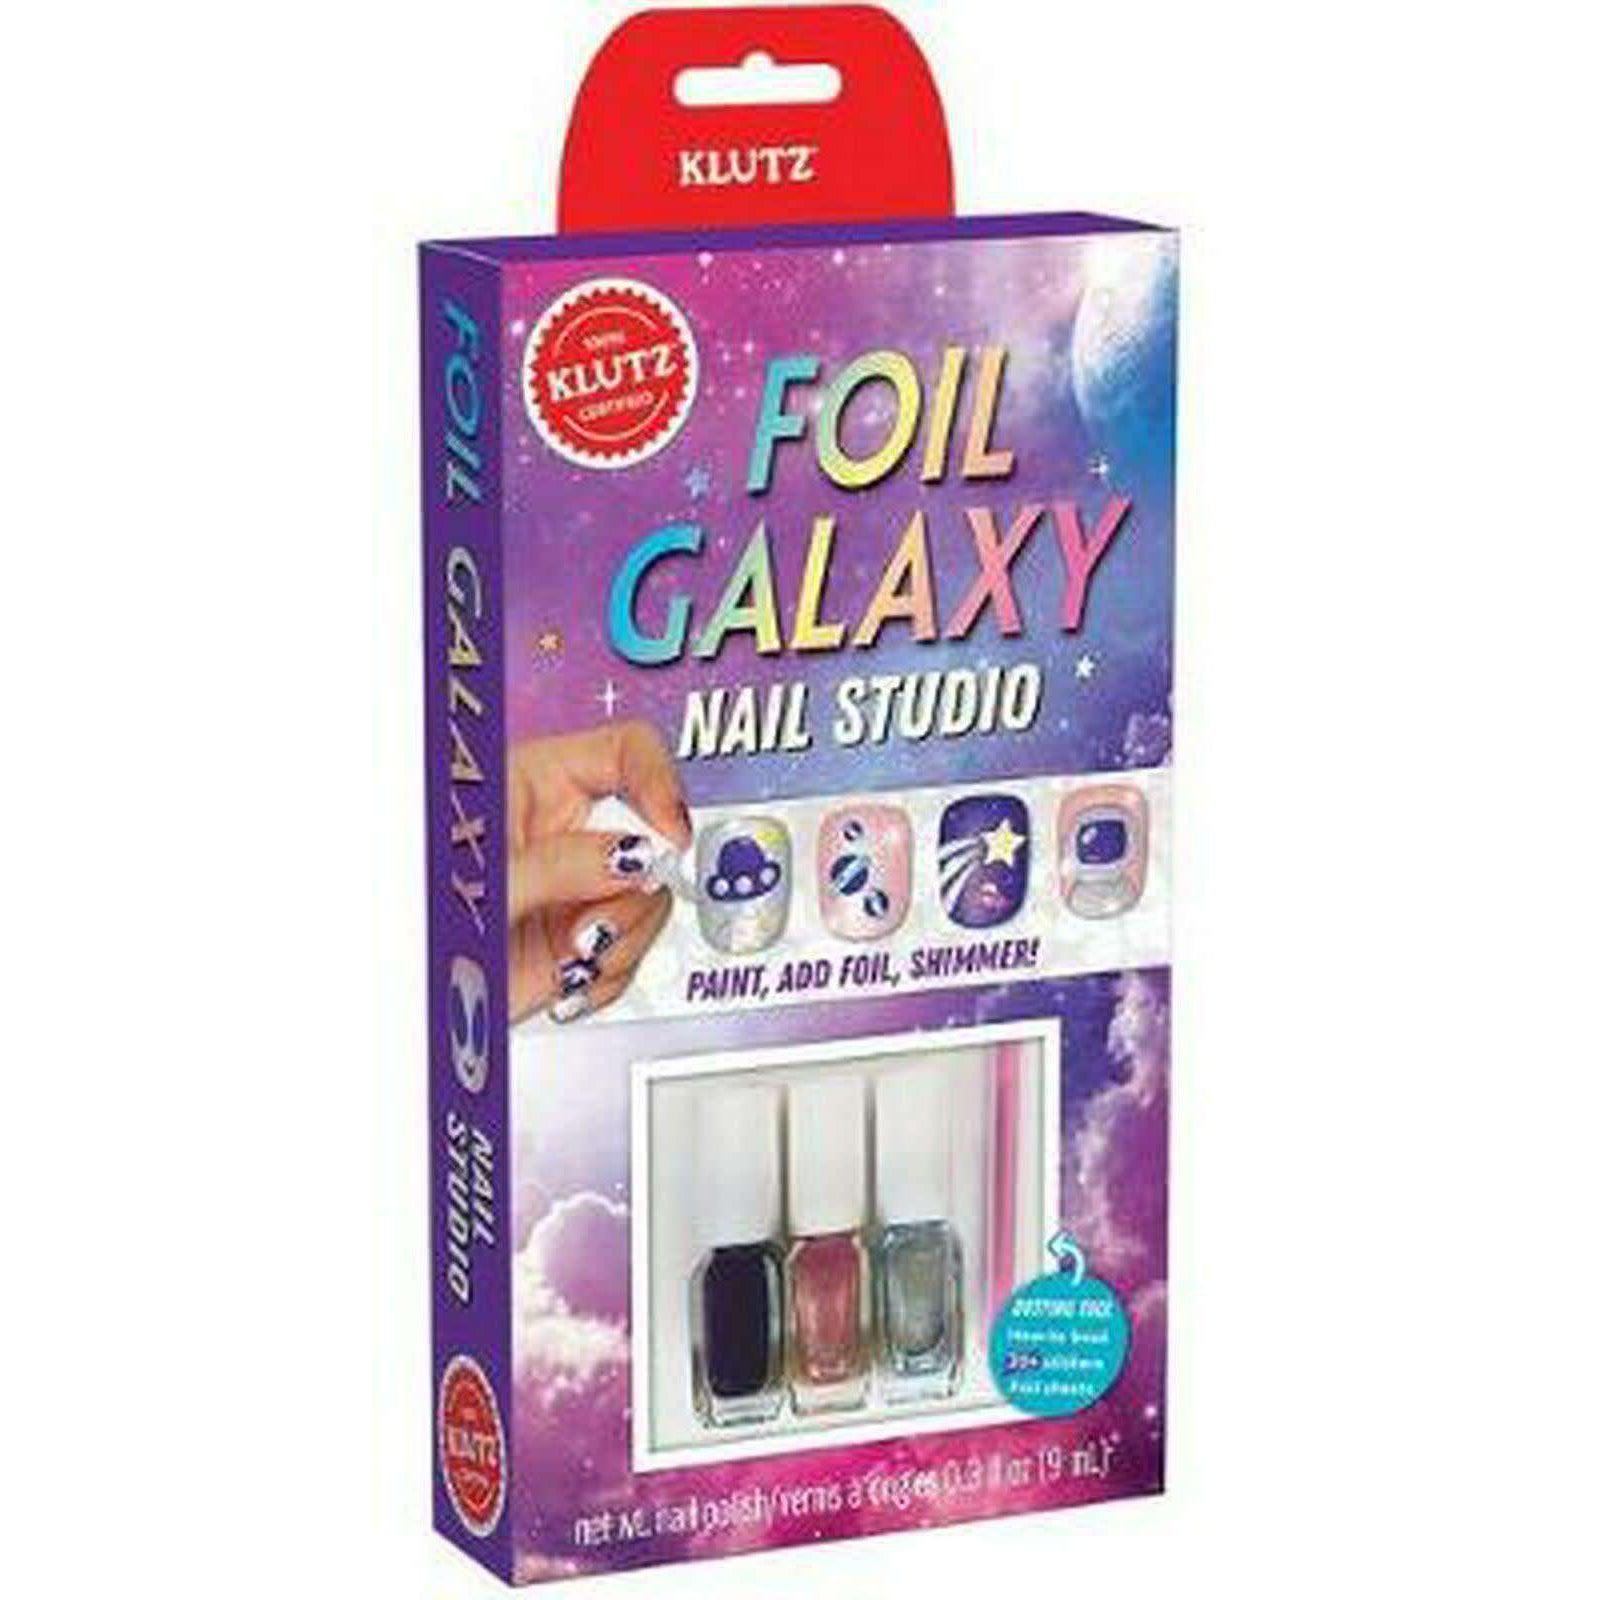 Klutz-Nail Studio - Foil Galaxy-730767589189-Legacy Toys